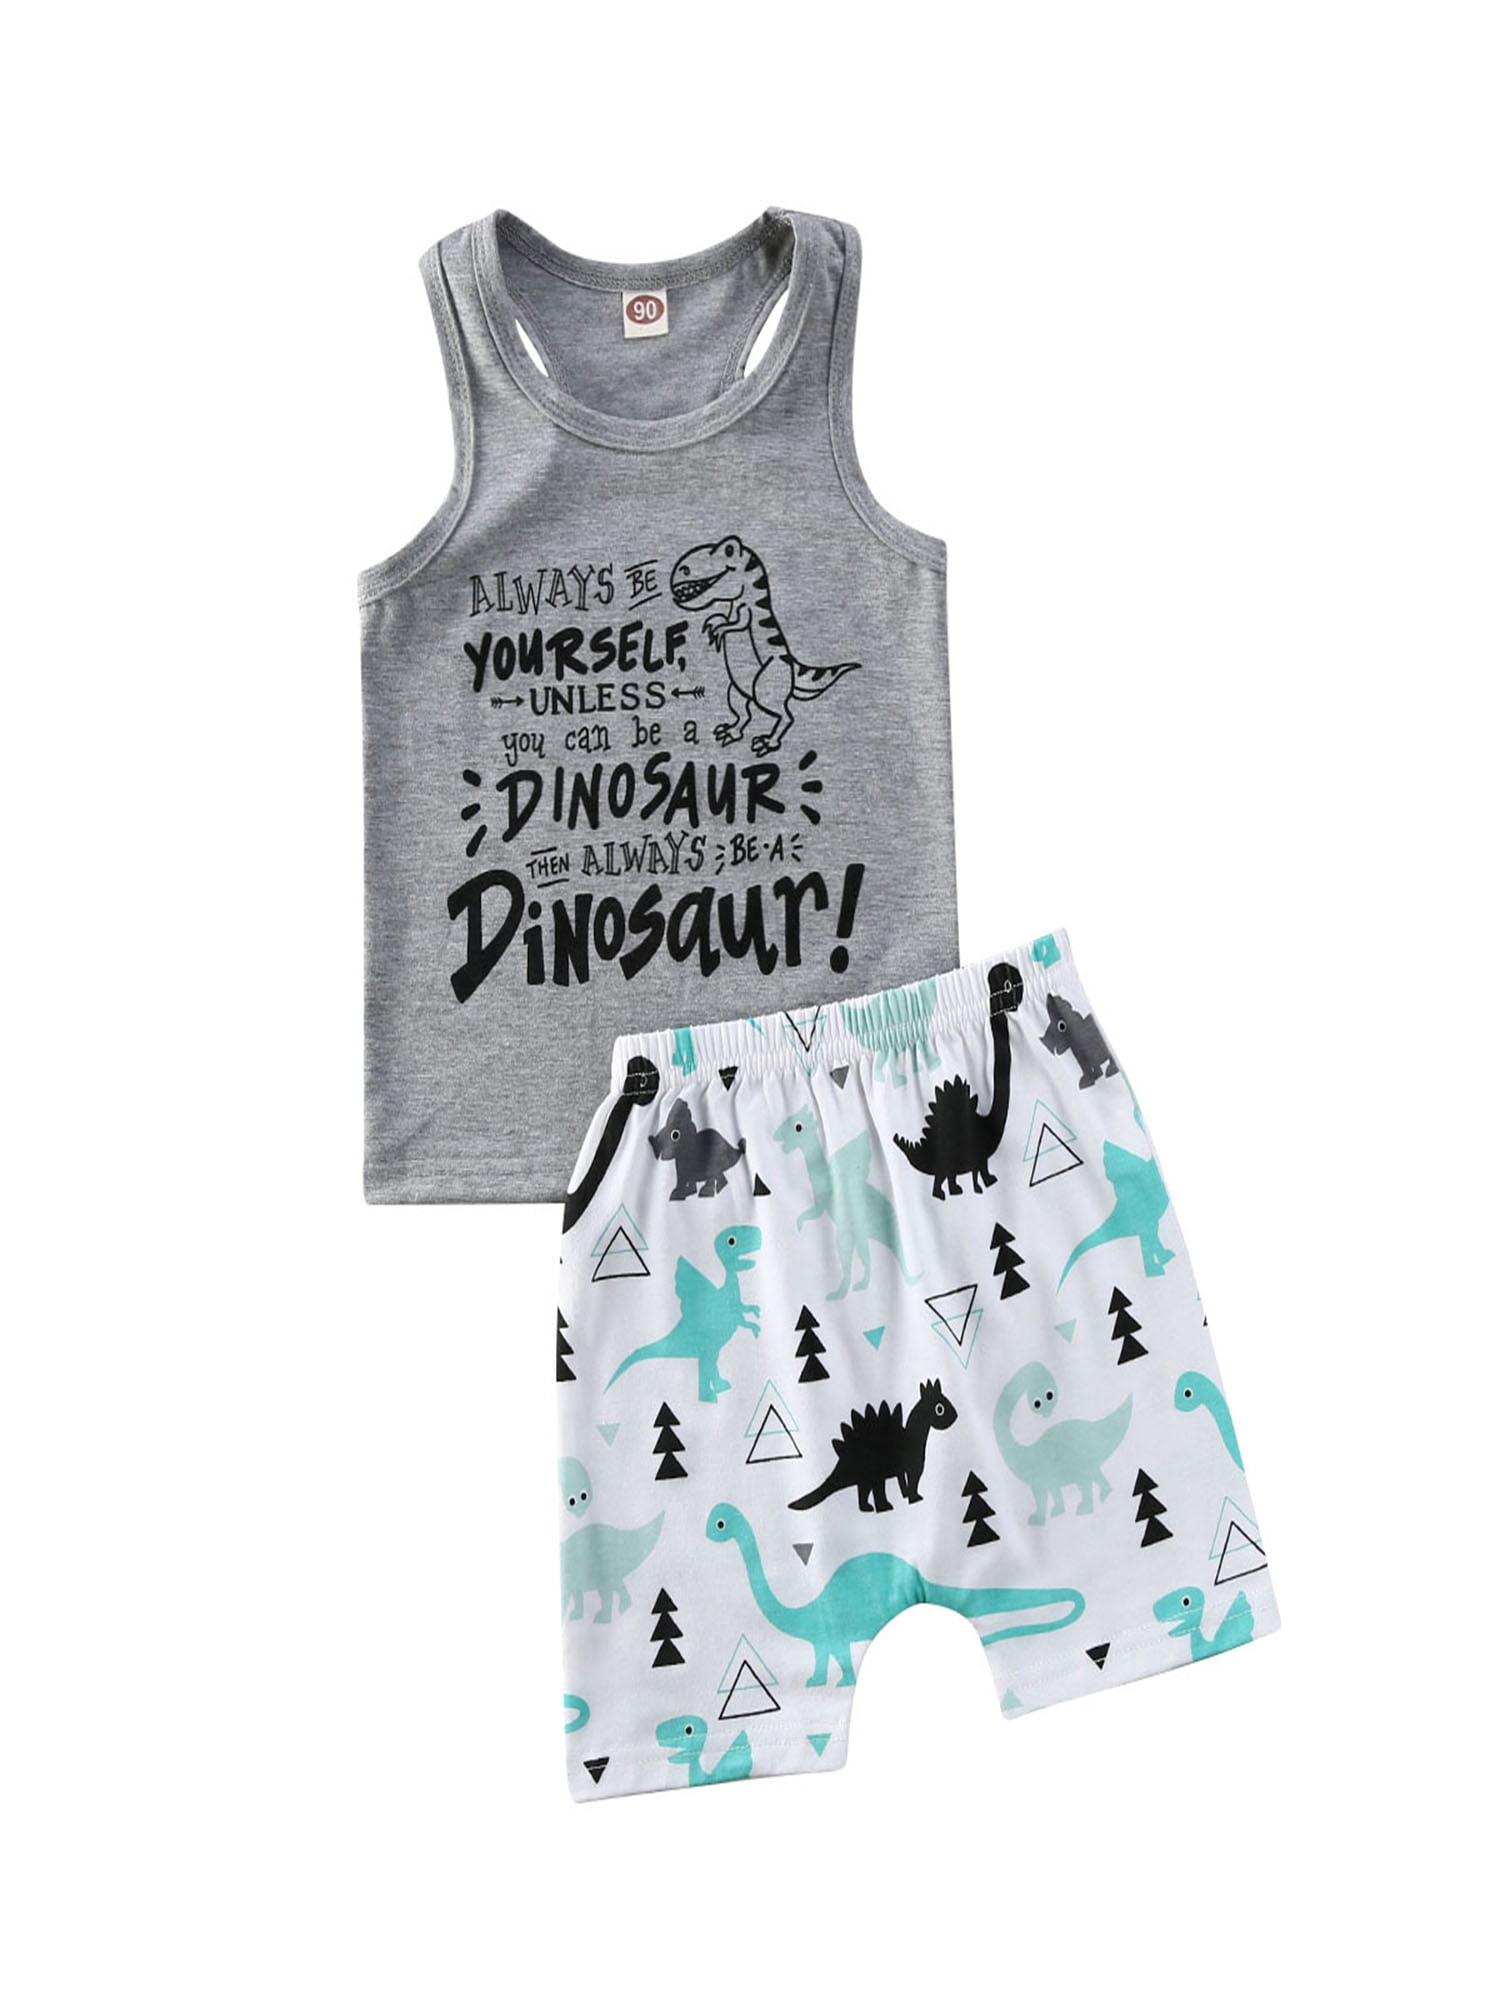 2PC Newborn Infant Kids Baby Boys Clothes T-shirt Tops+Pants Dinosaur Outfit Set 